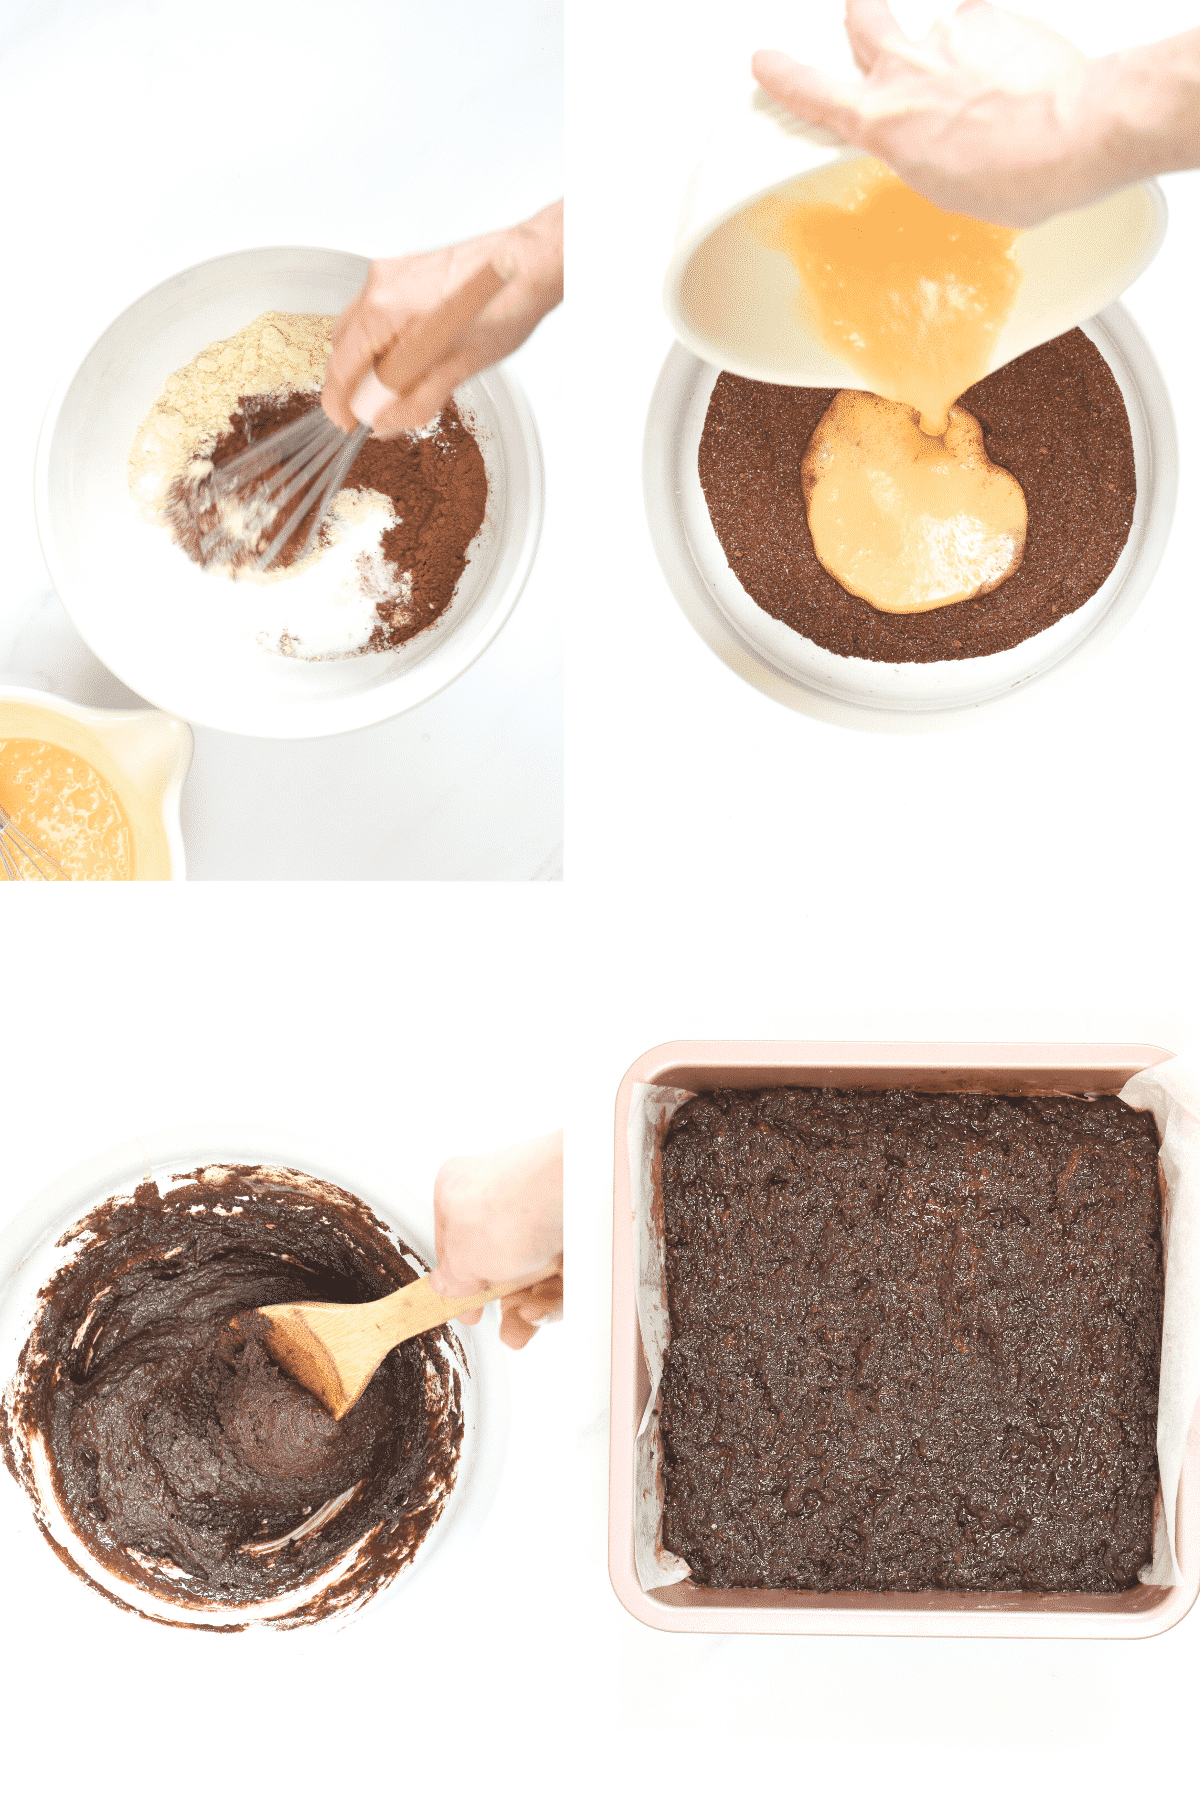 How to make keto brownies